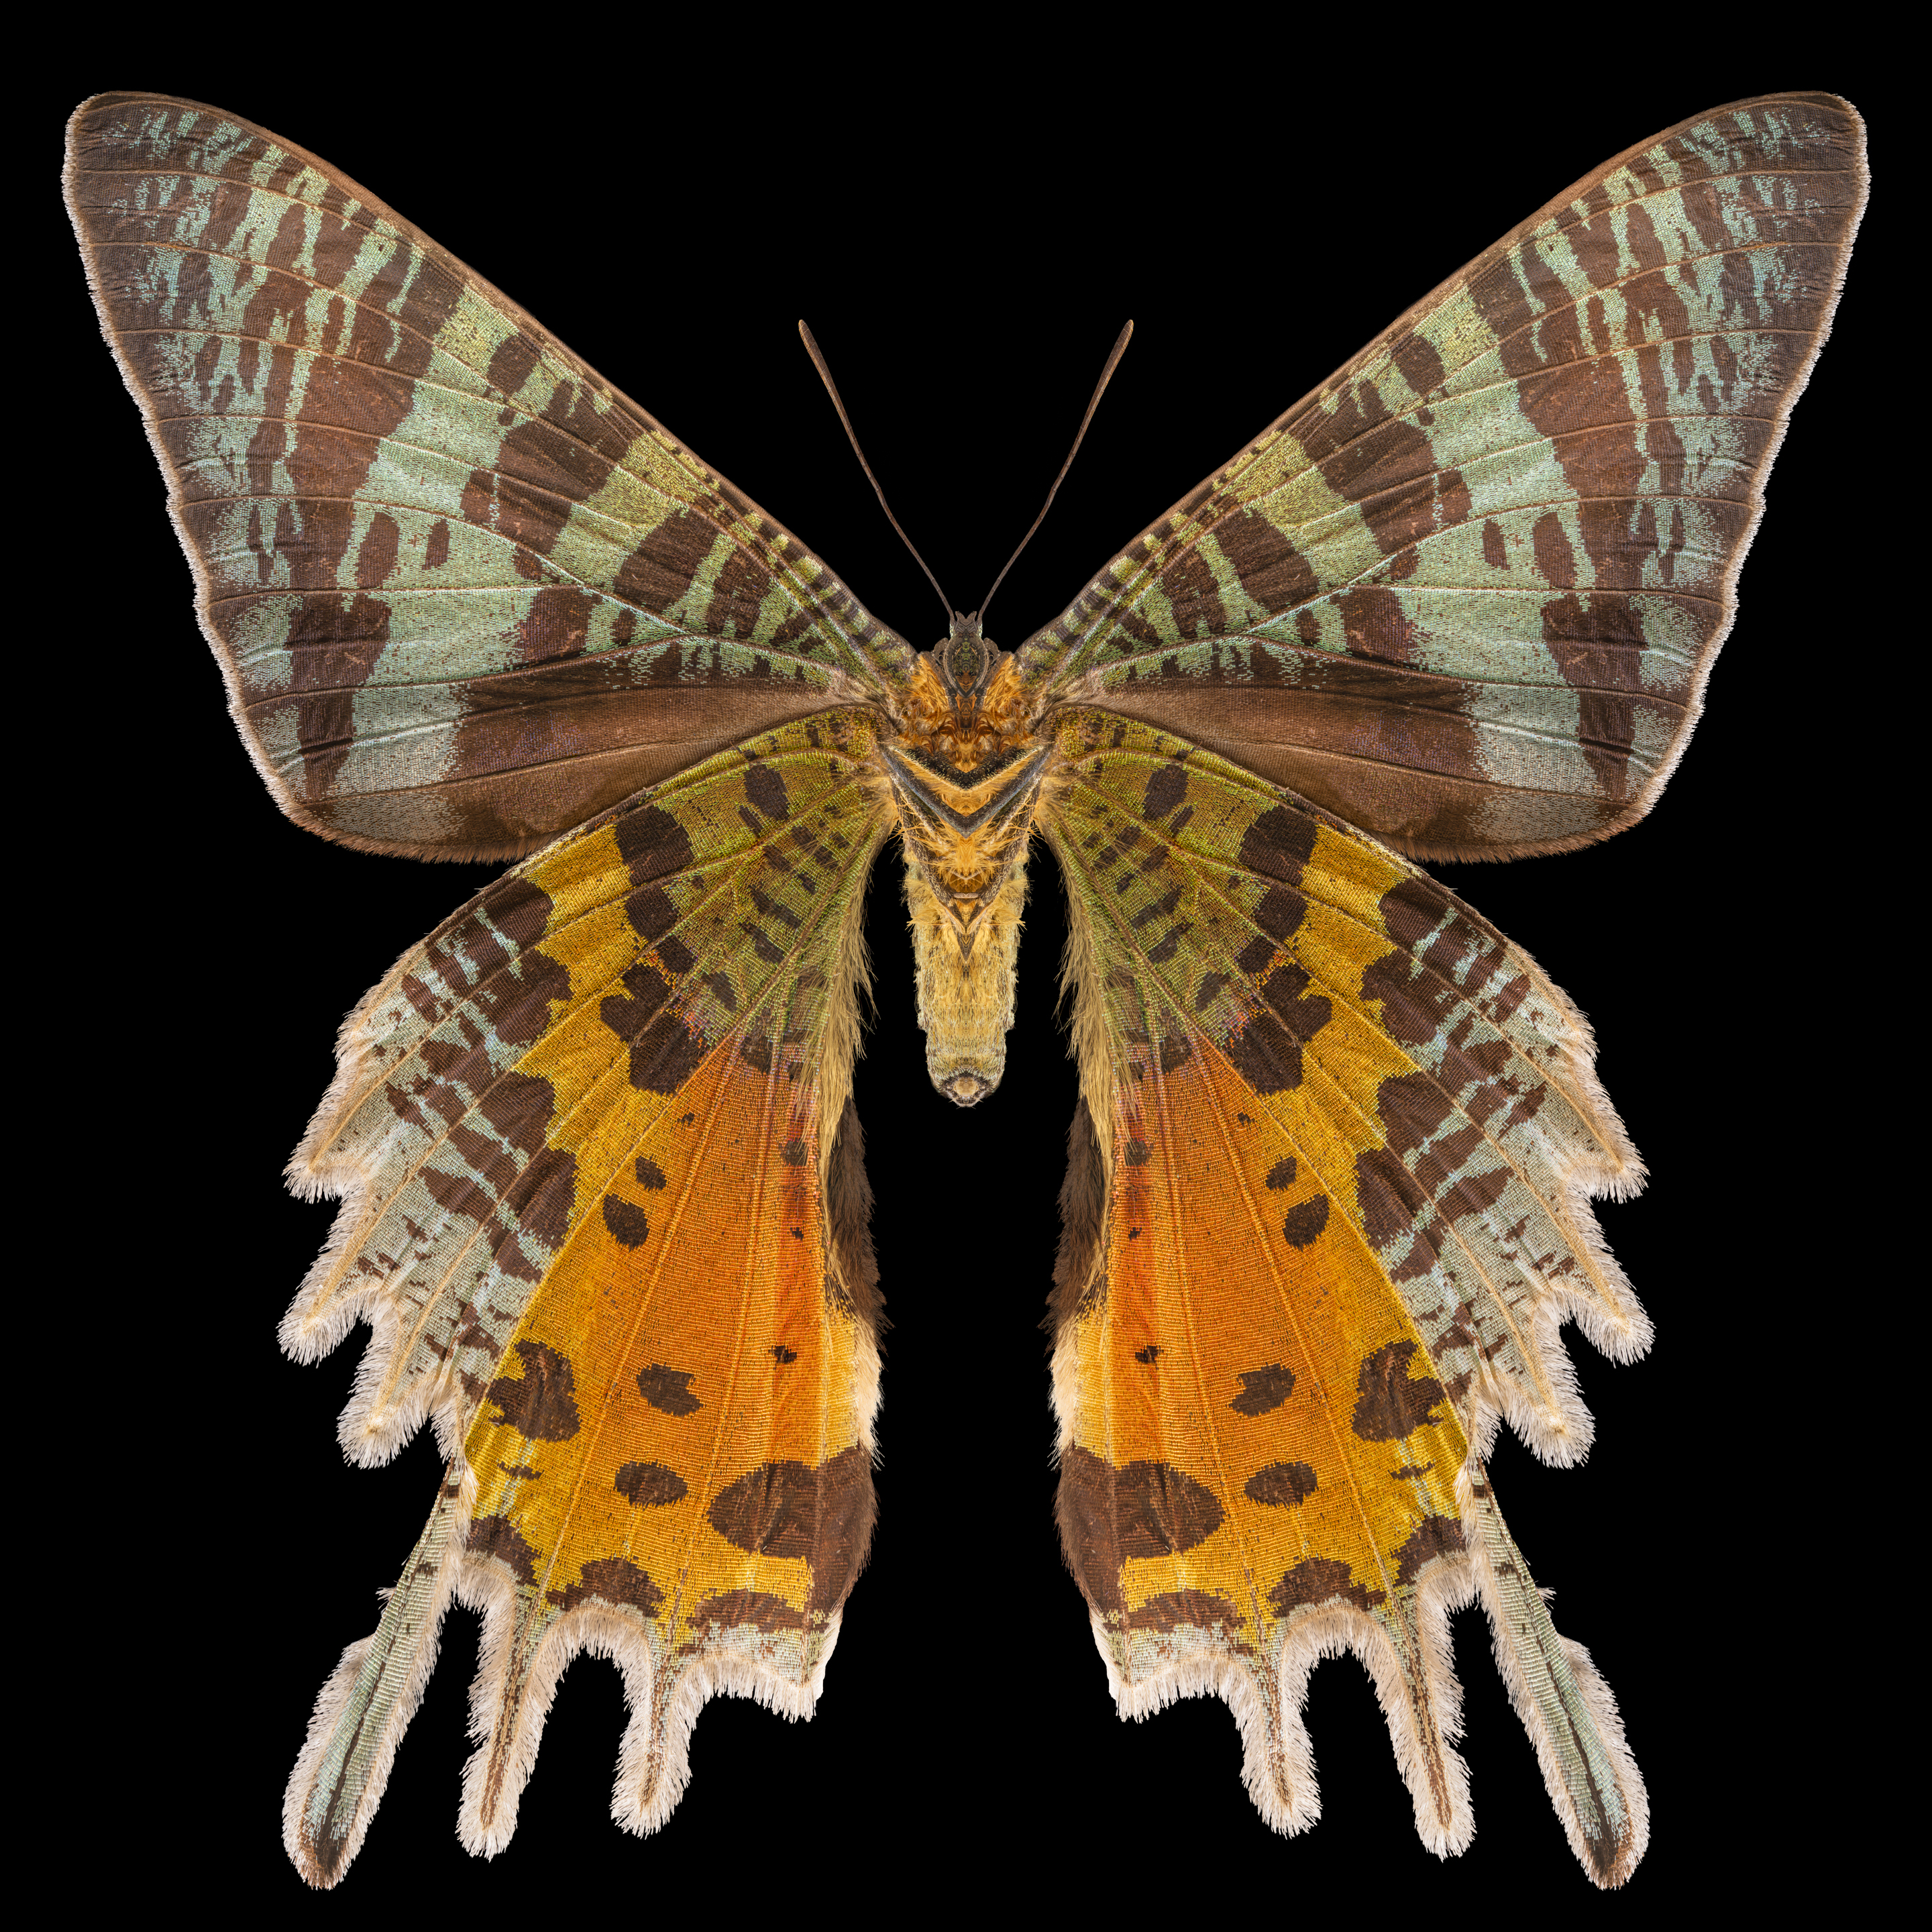 Amy Perlmutter, Sunset Moth, 2020, digital inkjet print, 40 x 40 in, edition of 12